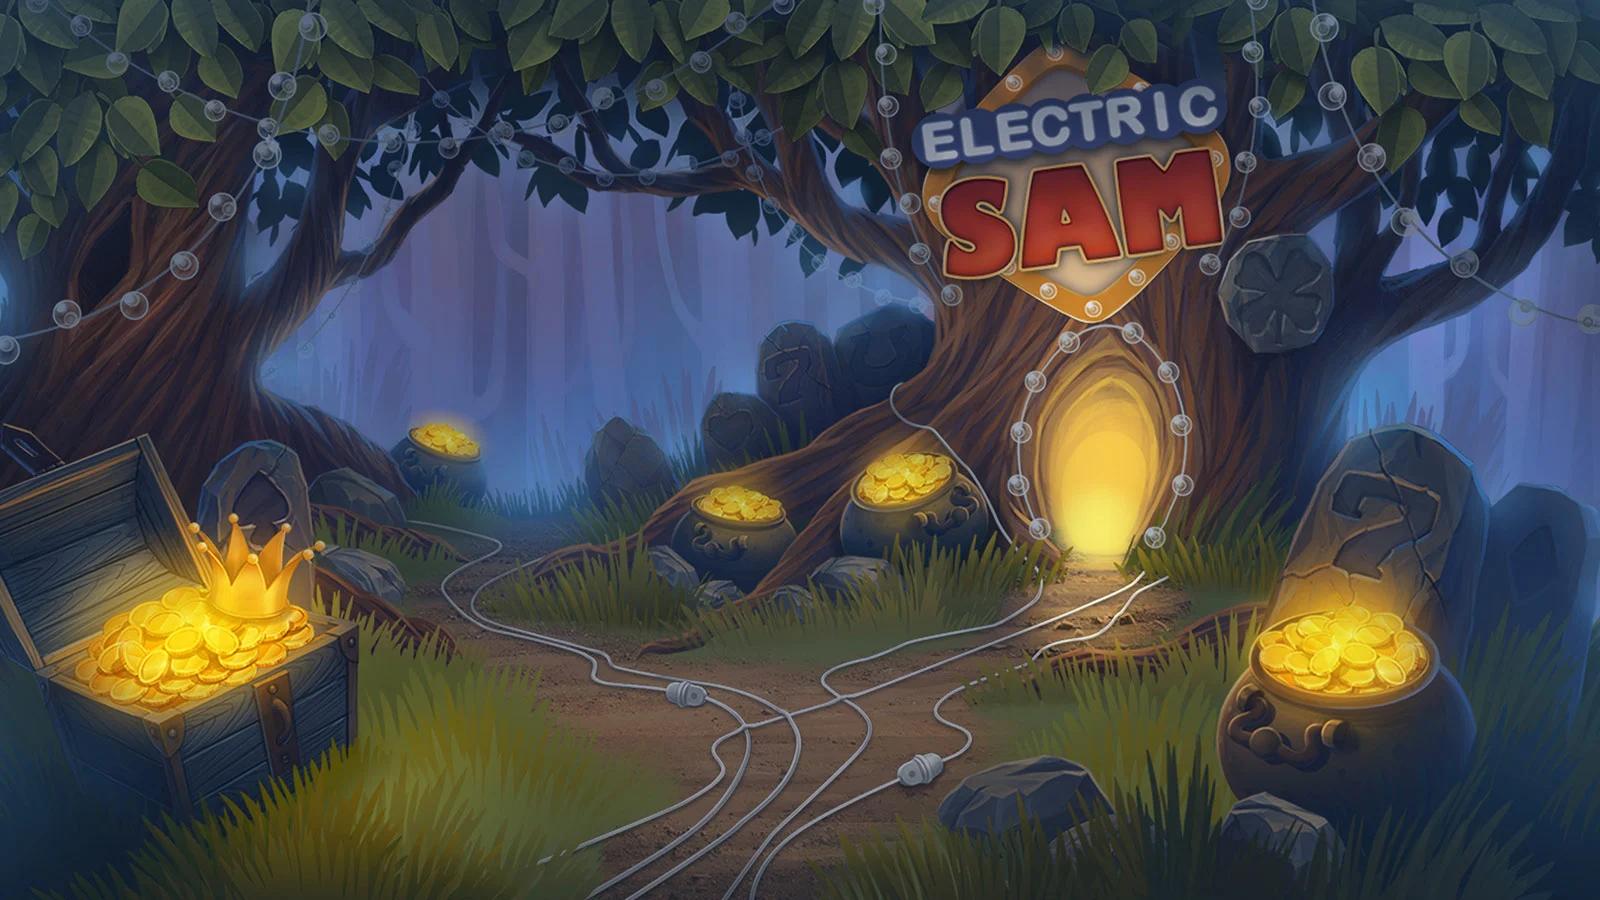 Electric SAM